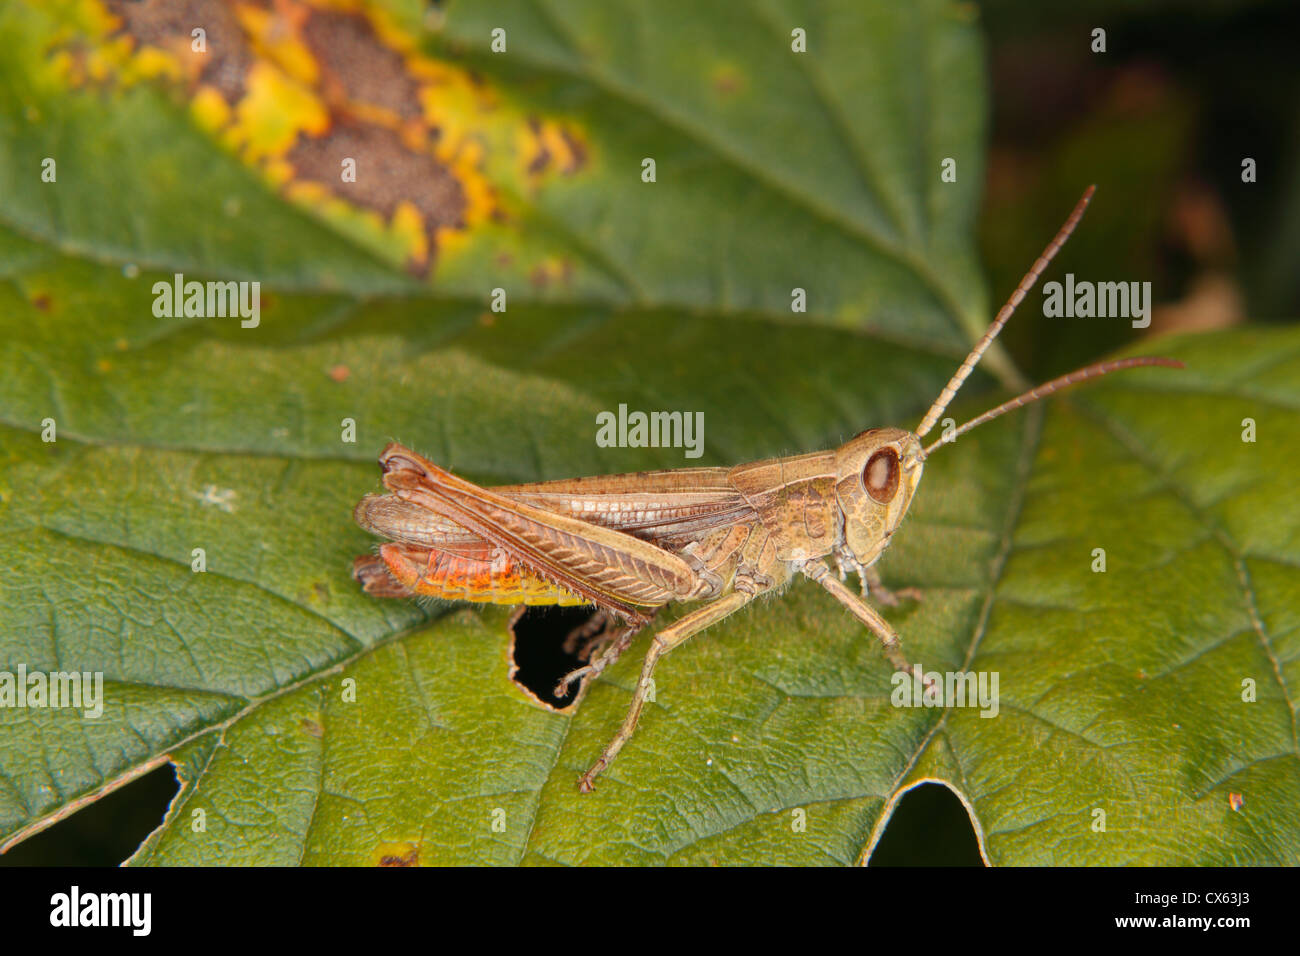 Common field grasshopper (Chorthippus brunneus) on a leaf Stock Photo